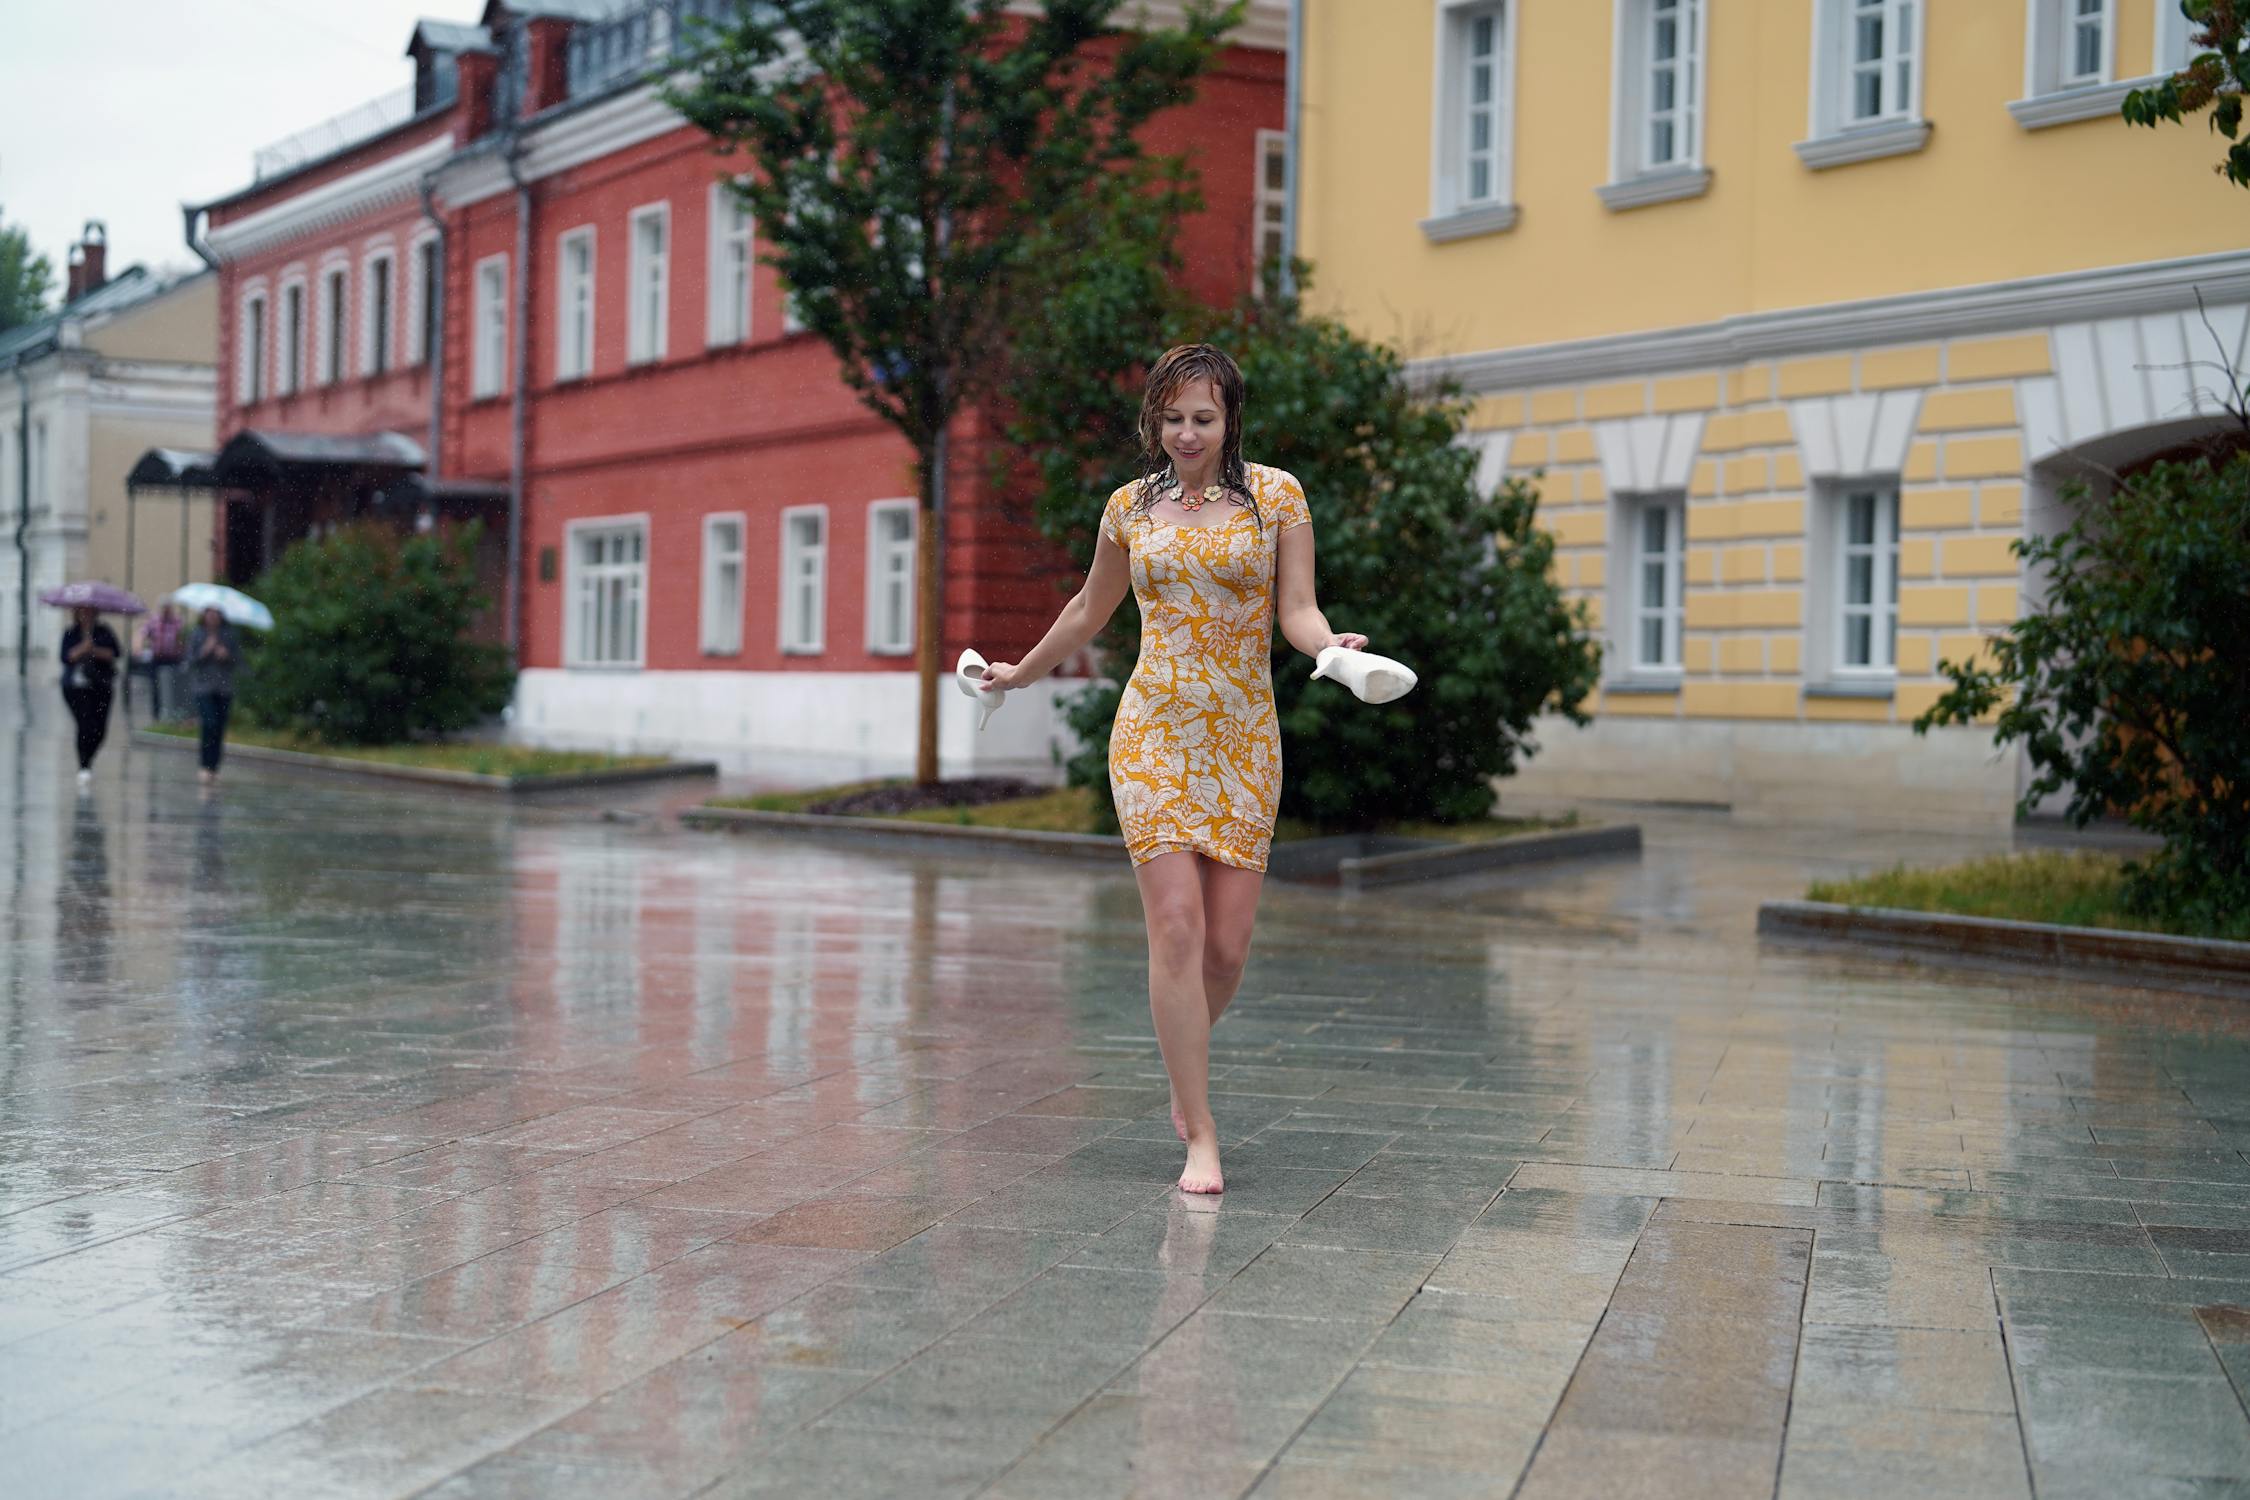 https://images.pexels.com/photos/17377271/pexels-photo-17377271/free-photo-of-woman-walking-barefoot-in-town-in-rain.jpeg?auto=compress&amp;cs=tinysrgb&amp;w=1260&amp;h=750&amp;dpr=2